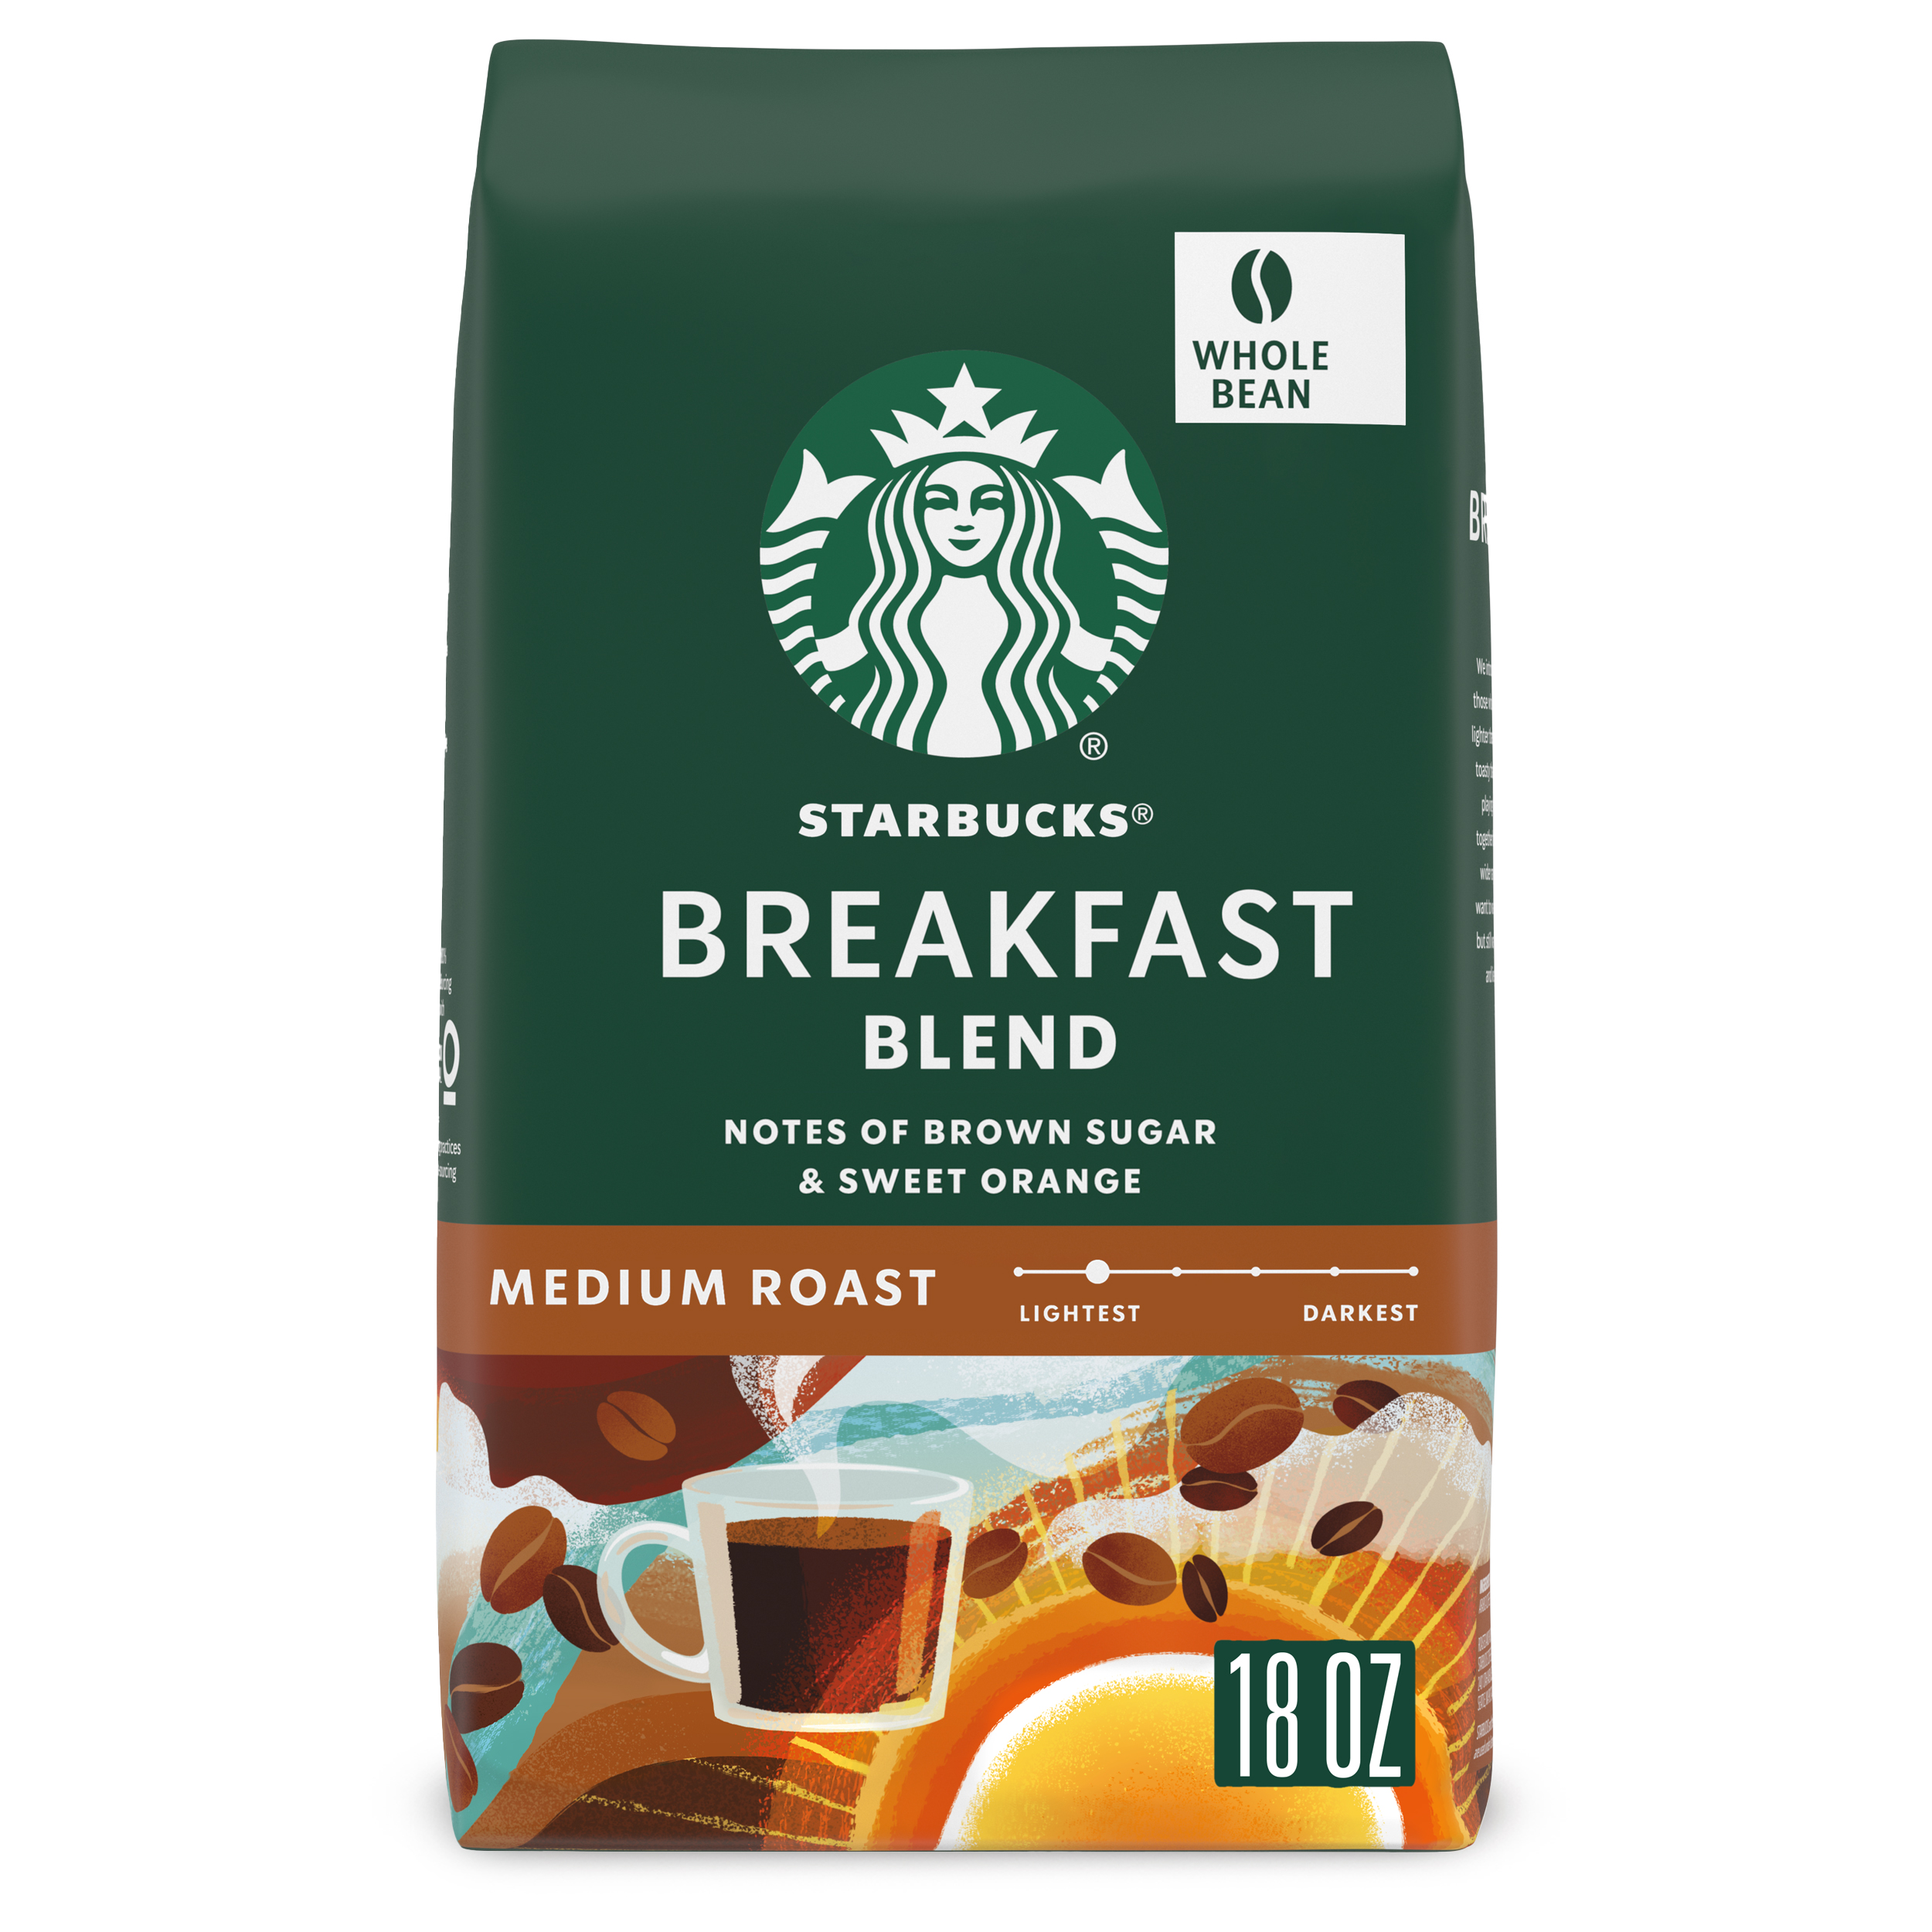 Starbucks Arabica Beans Breakfast Blend, Medium Roast, Whole Bean Coffee, 18 oz - image 1 of 8